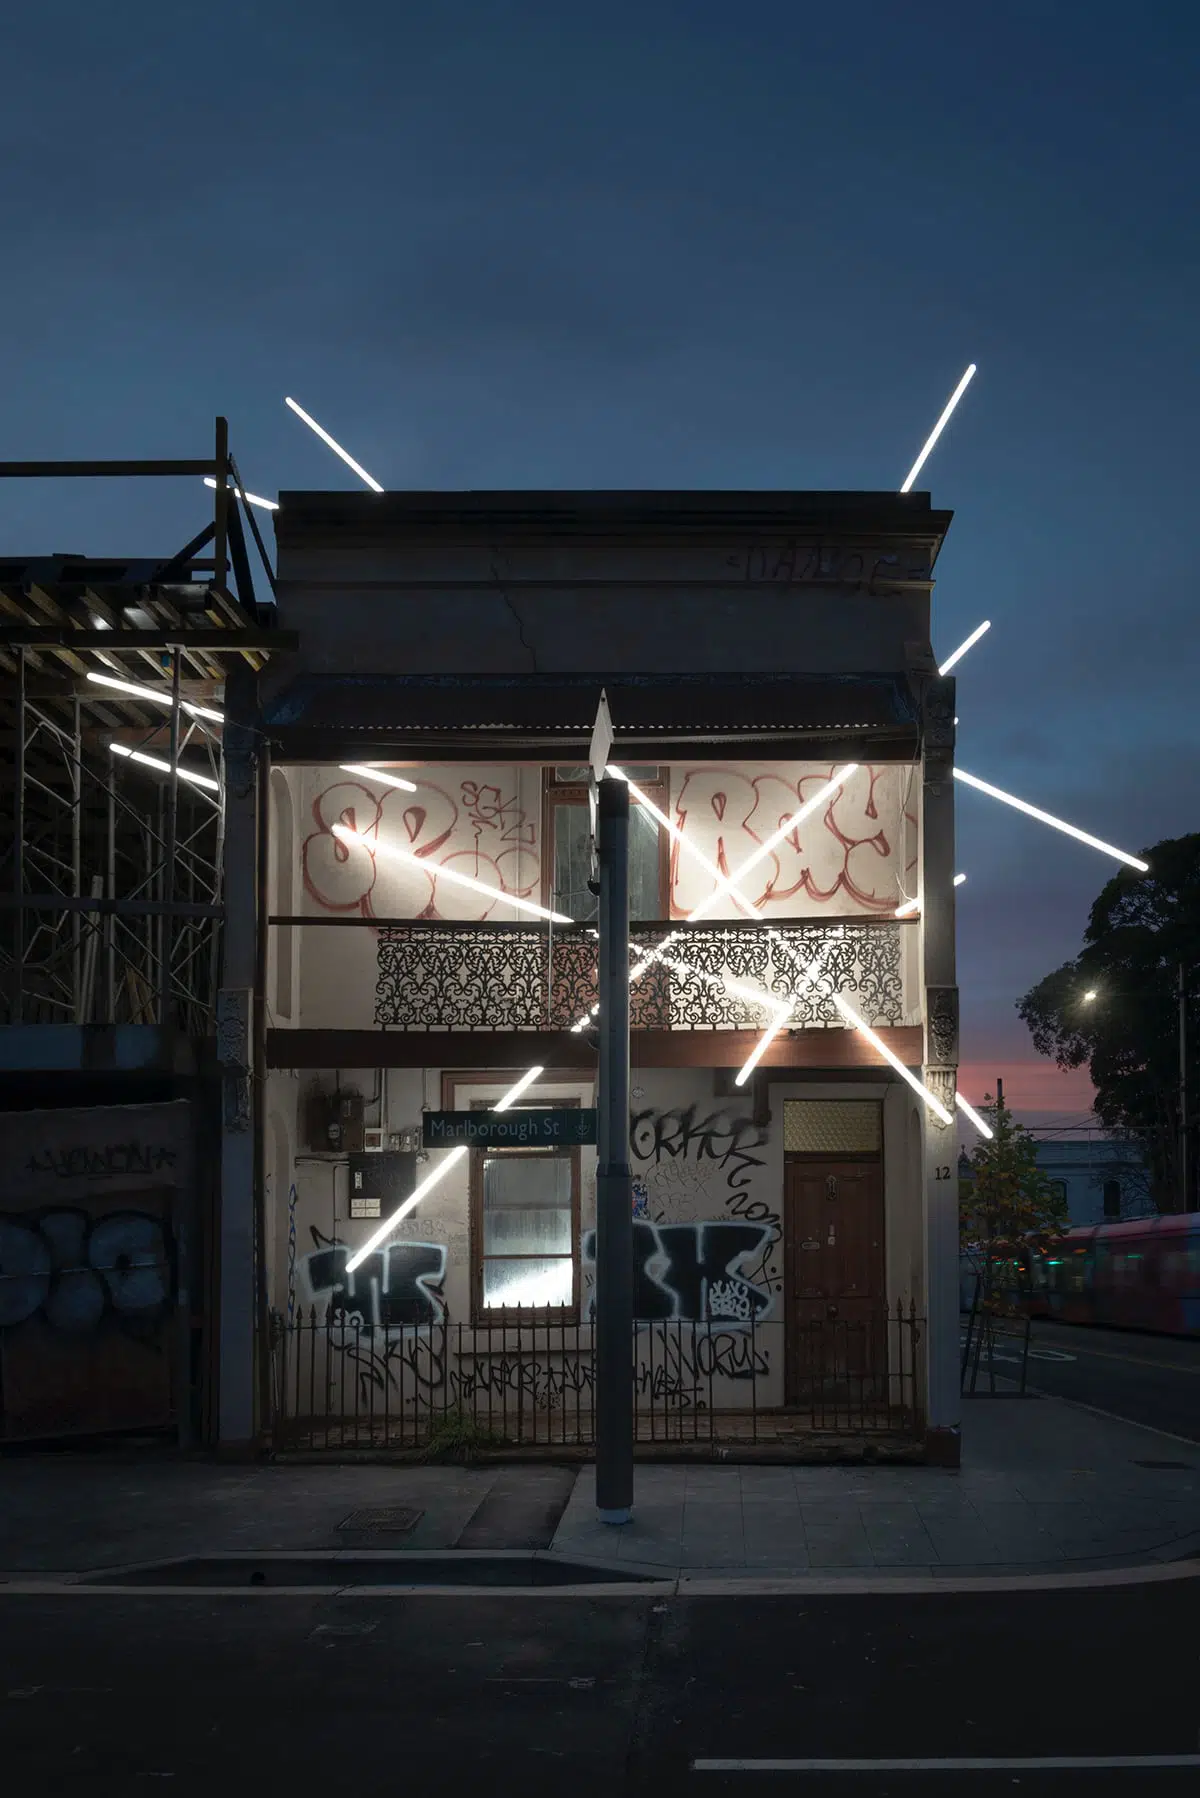 Ian Strange casa iluminada intervencion arquitectonica vista frontal con graffitis